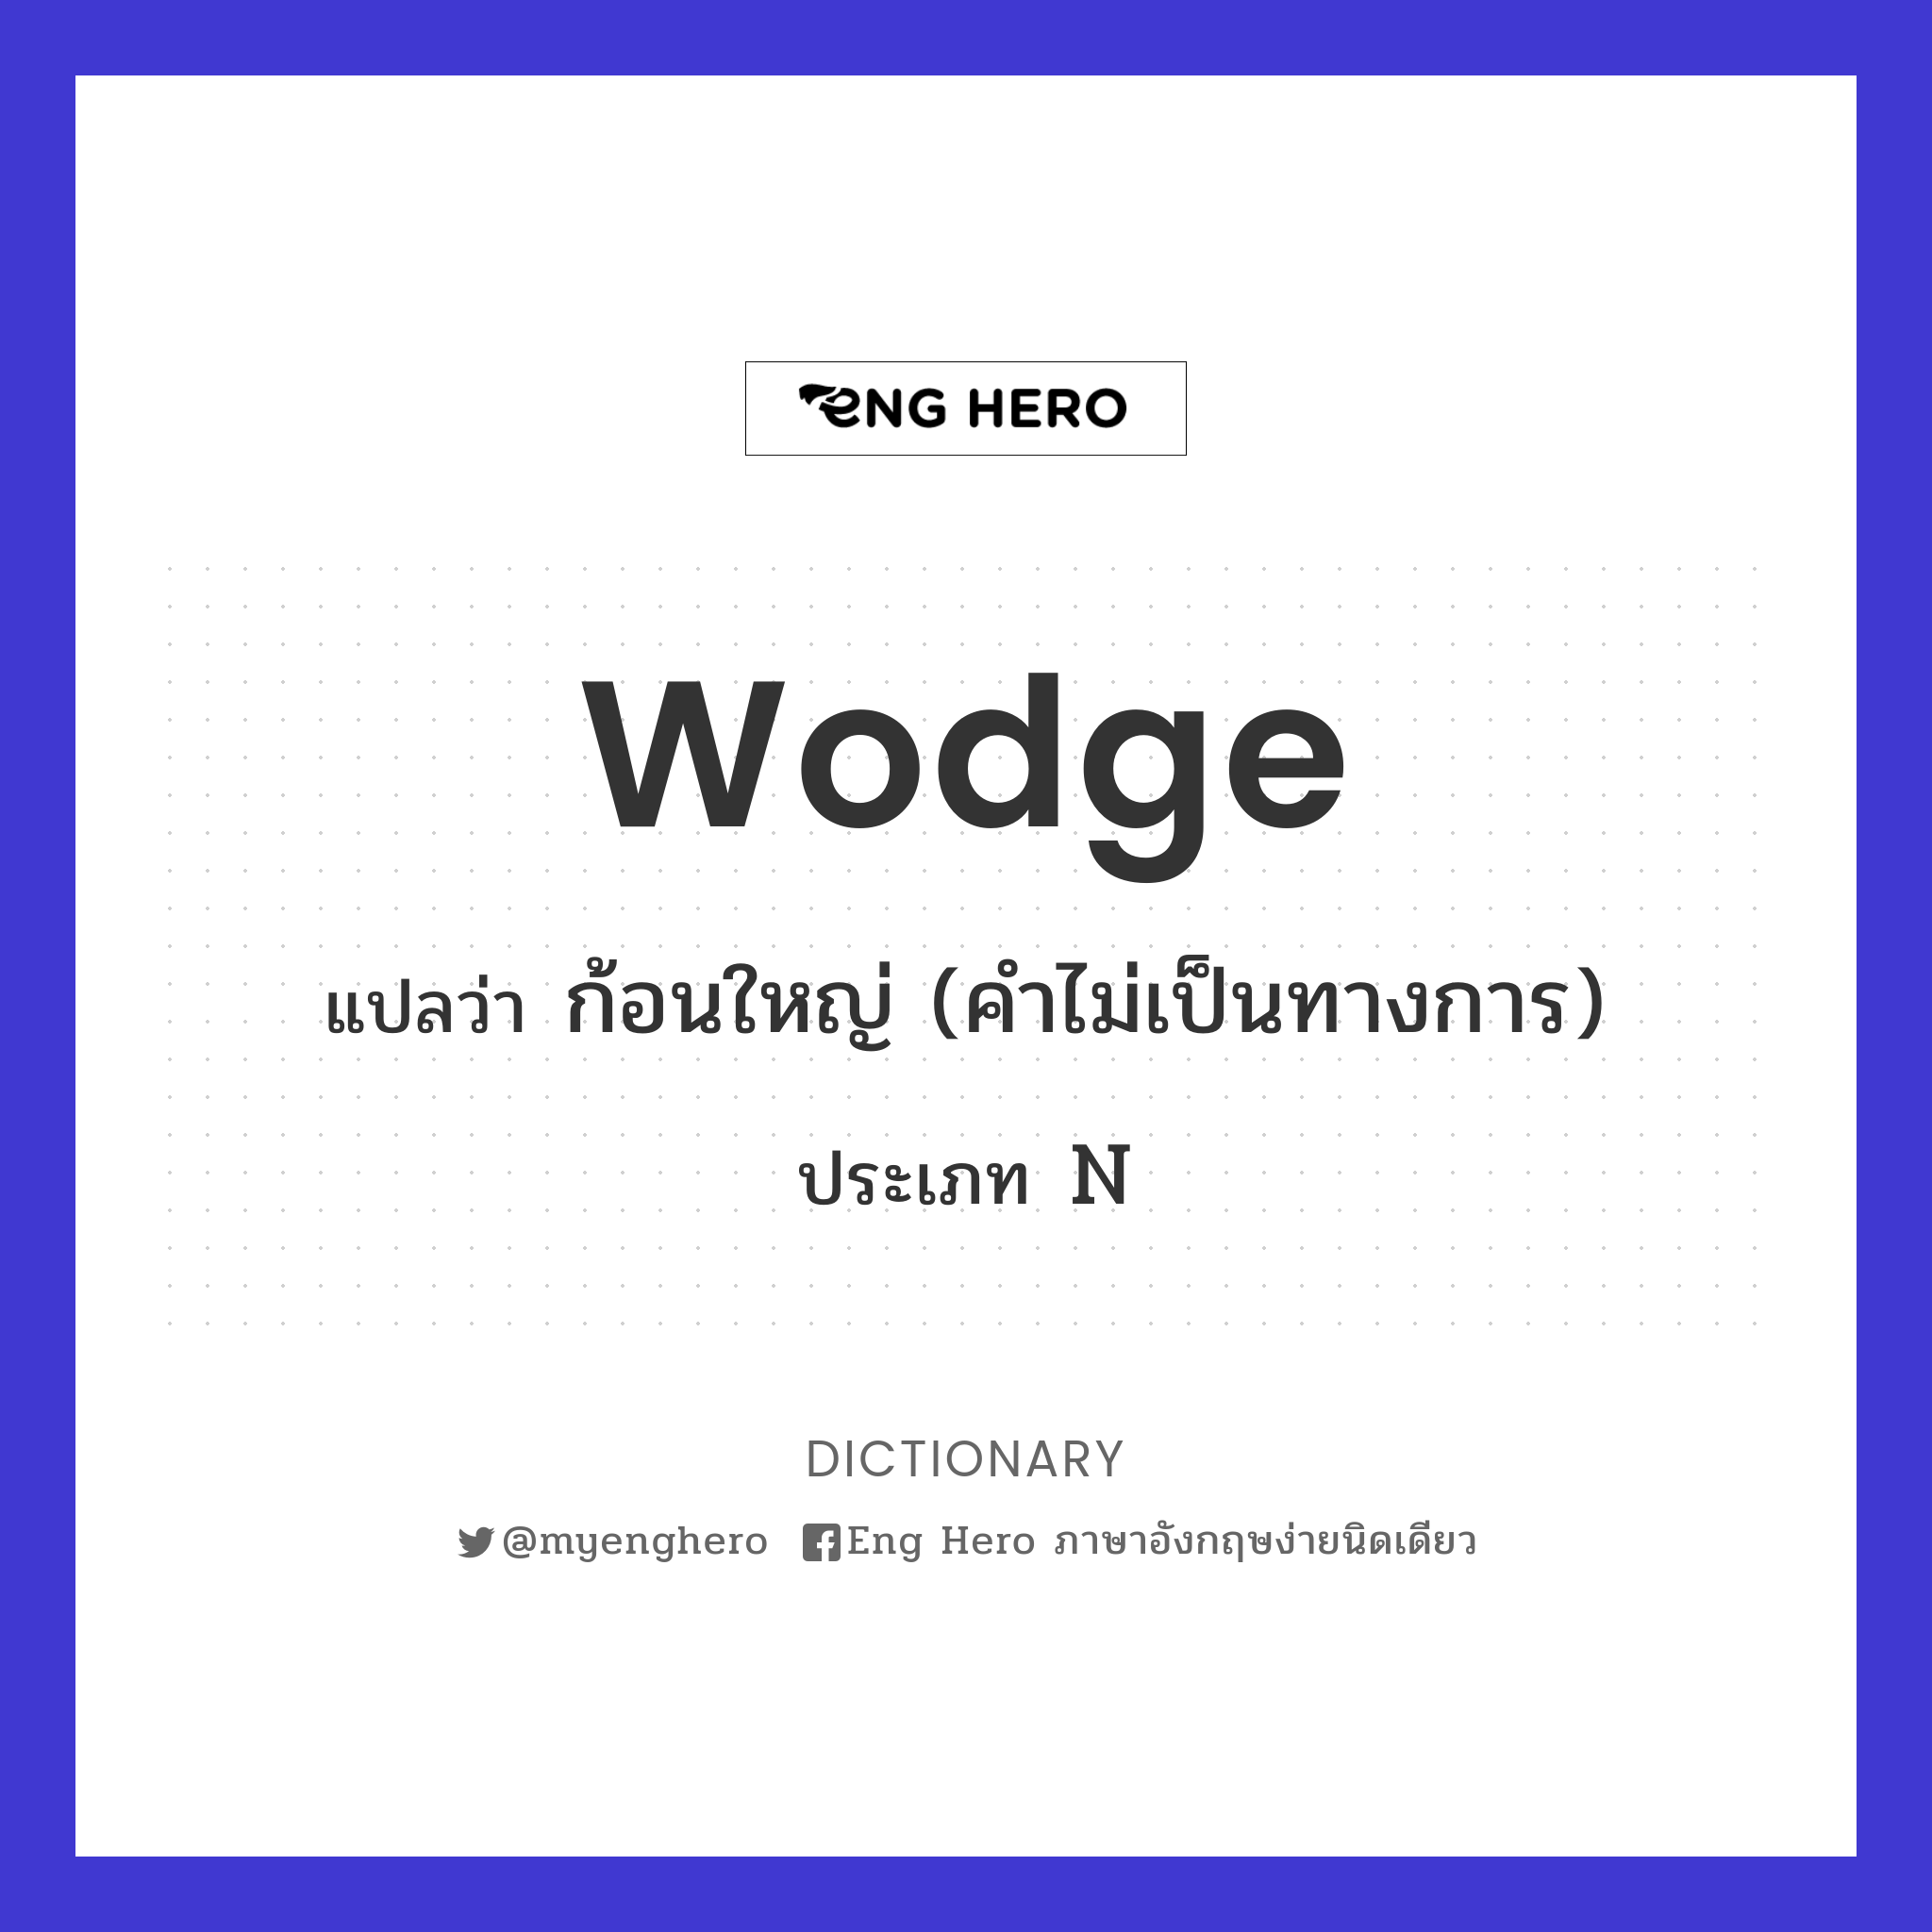 wodge